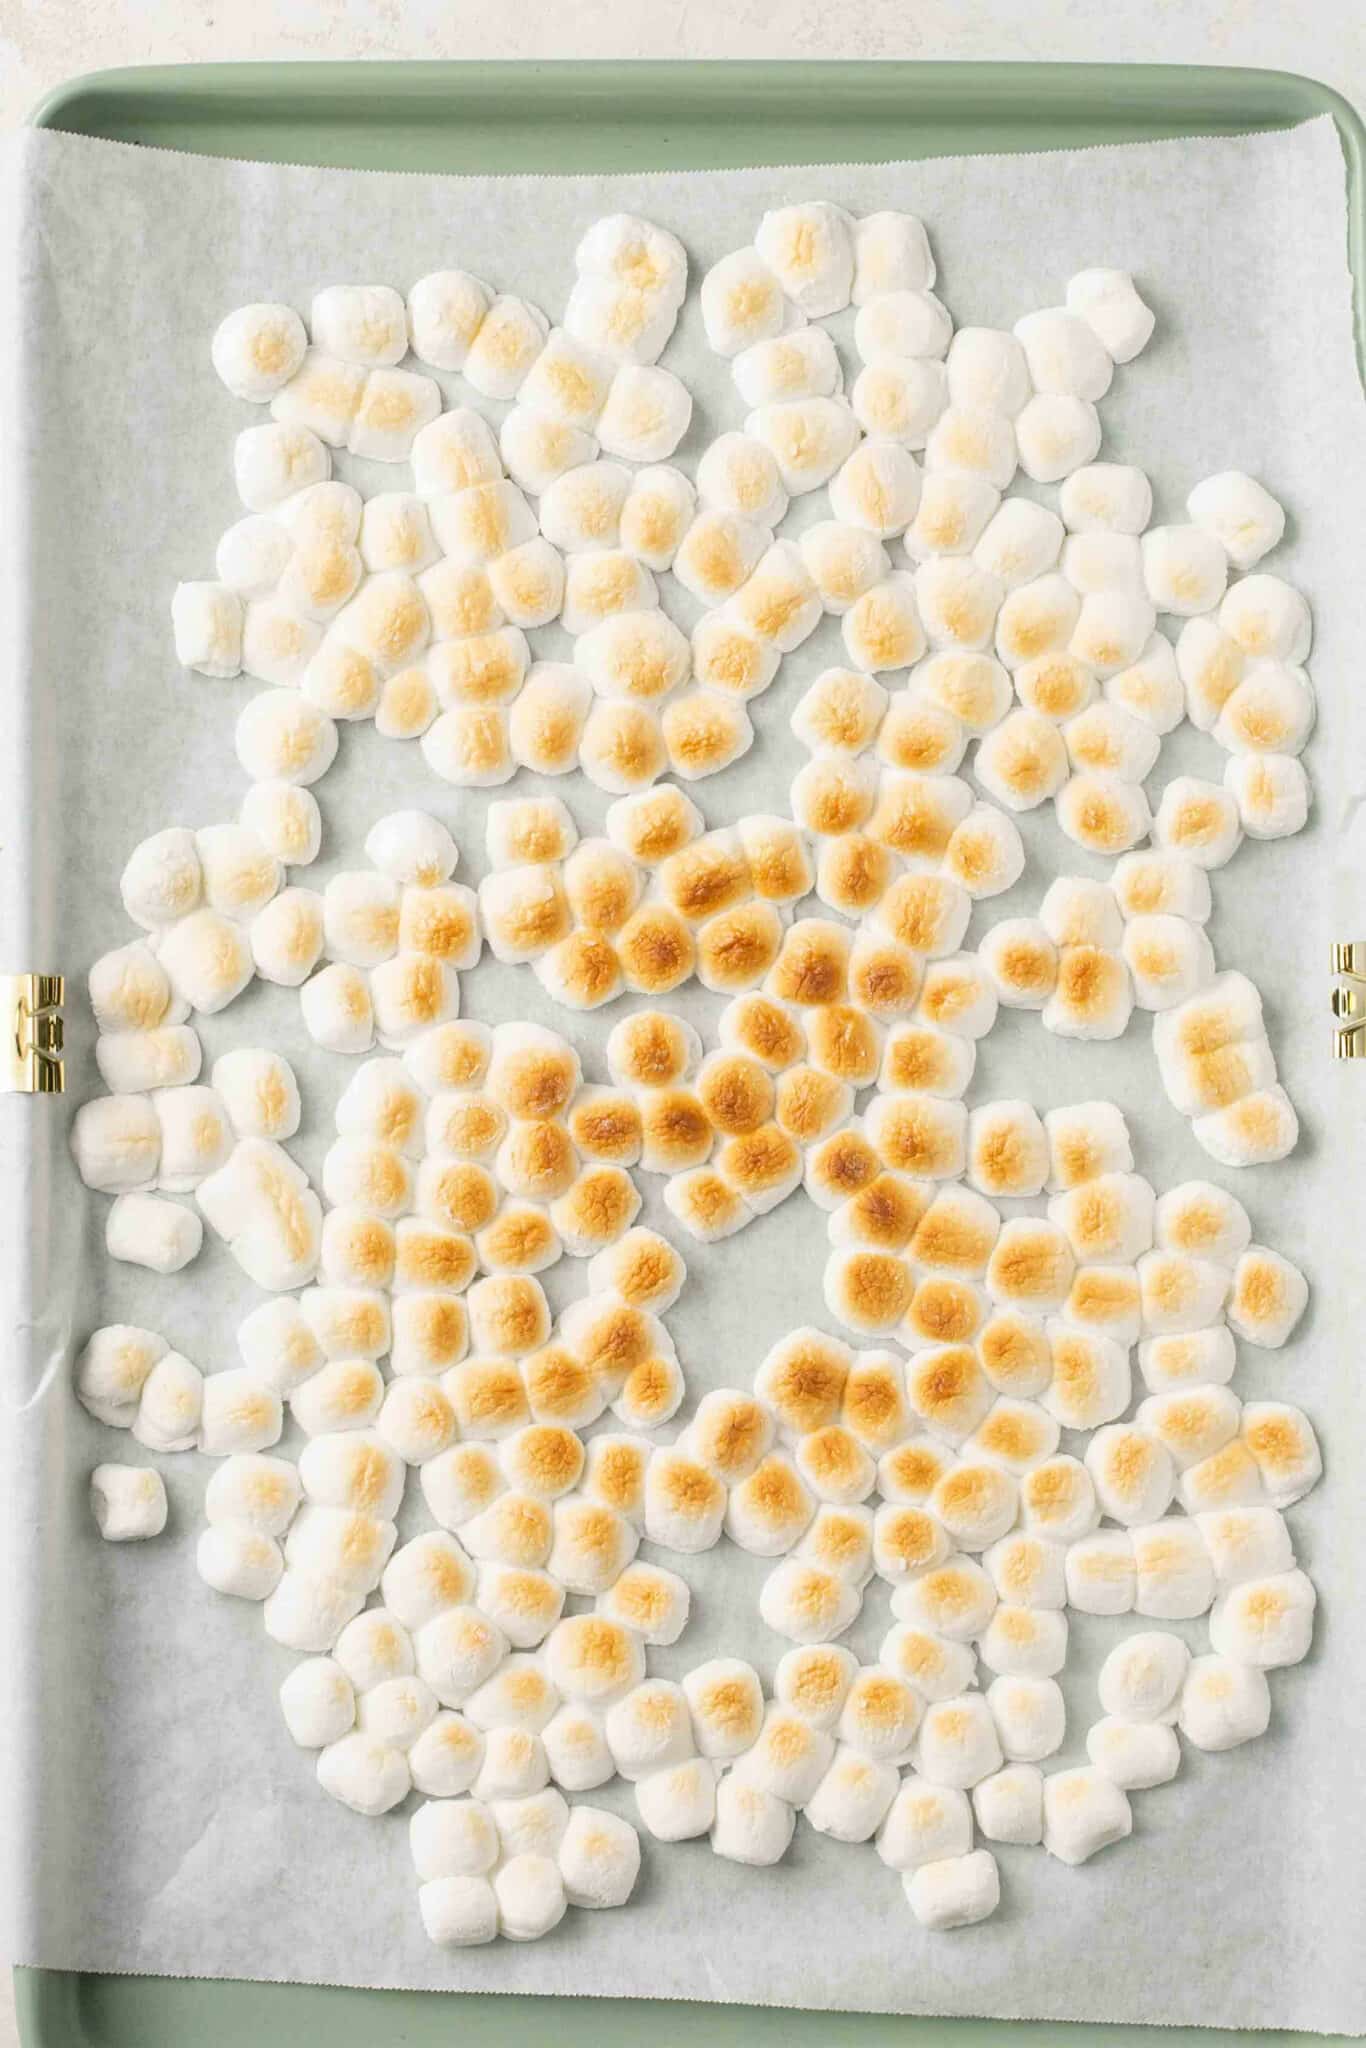 Toasted marshmallows on a baking sheet.